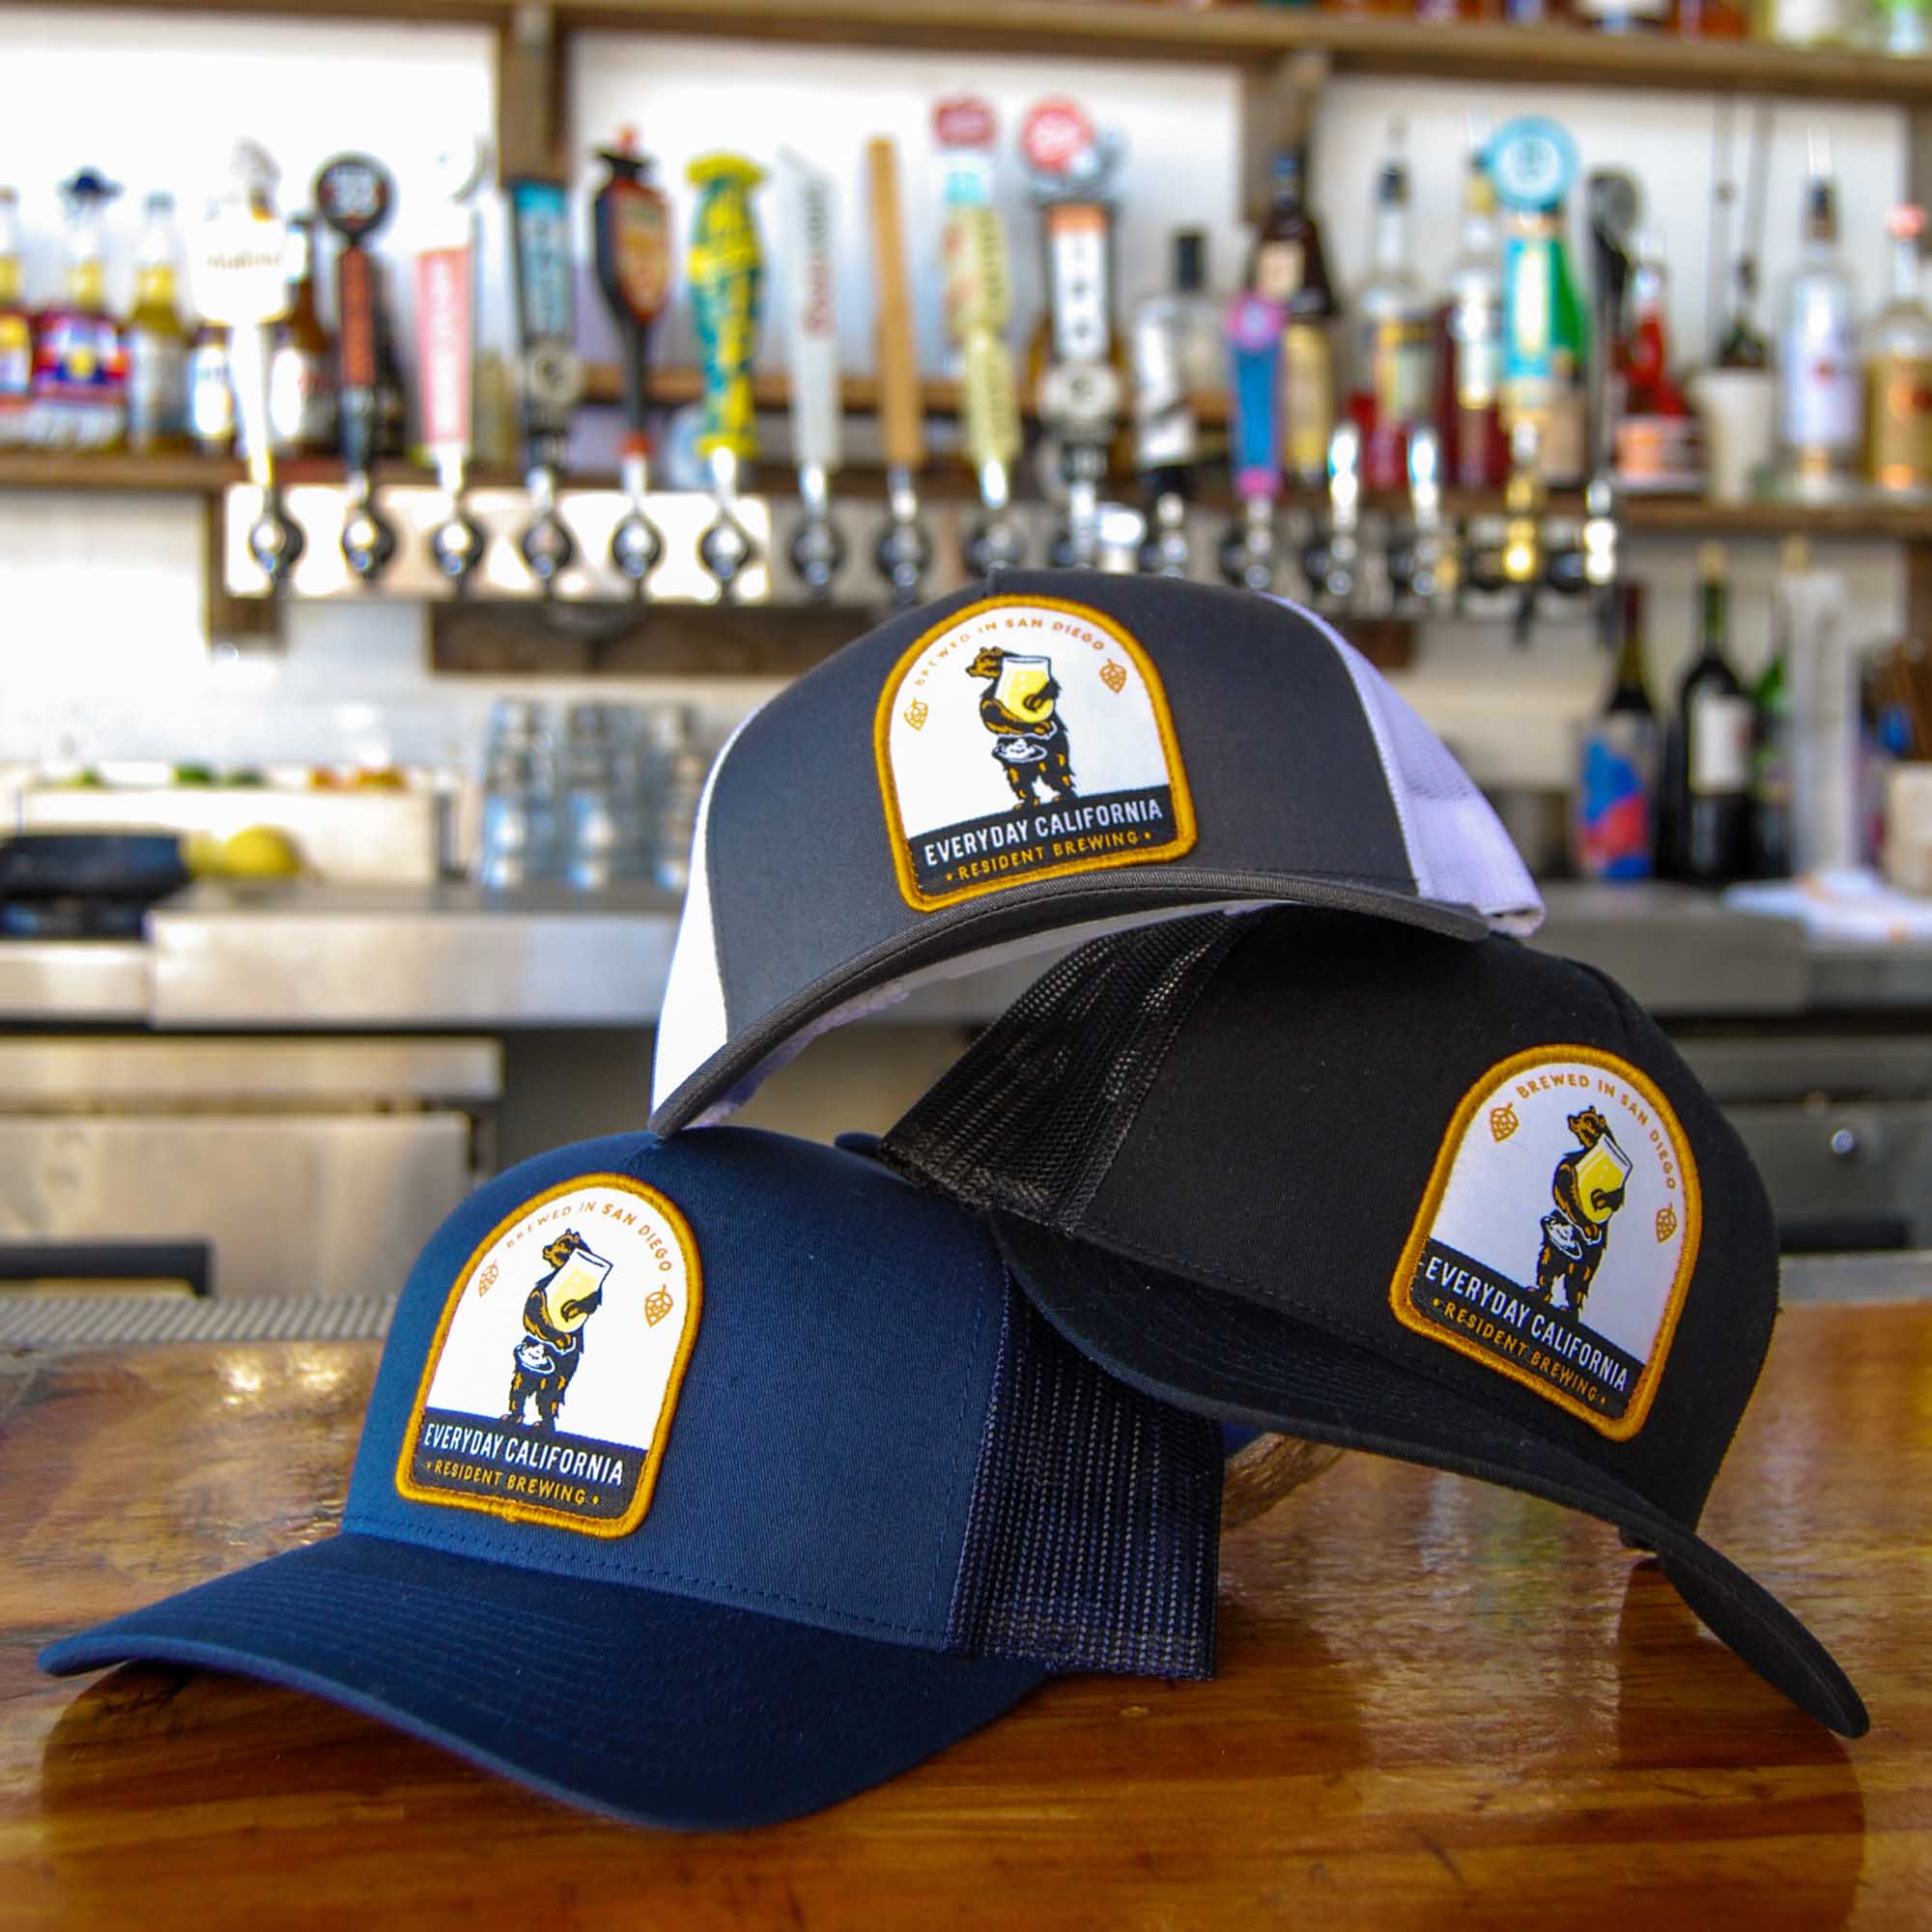 Everyday California Brewski Trucker Hats in all colors on bar